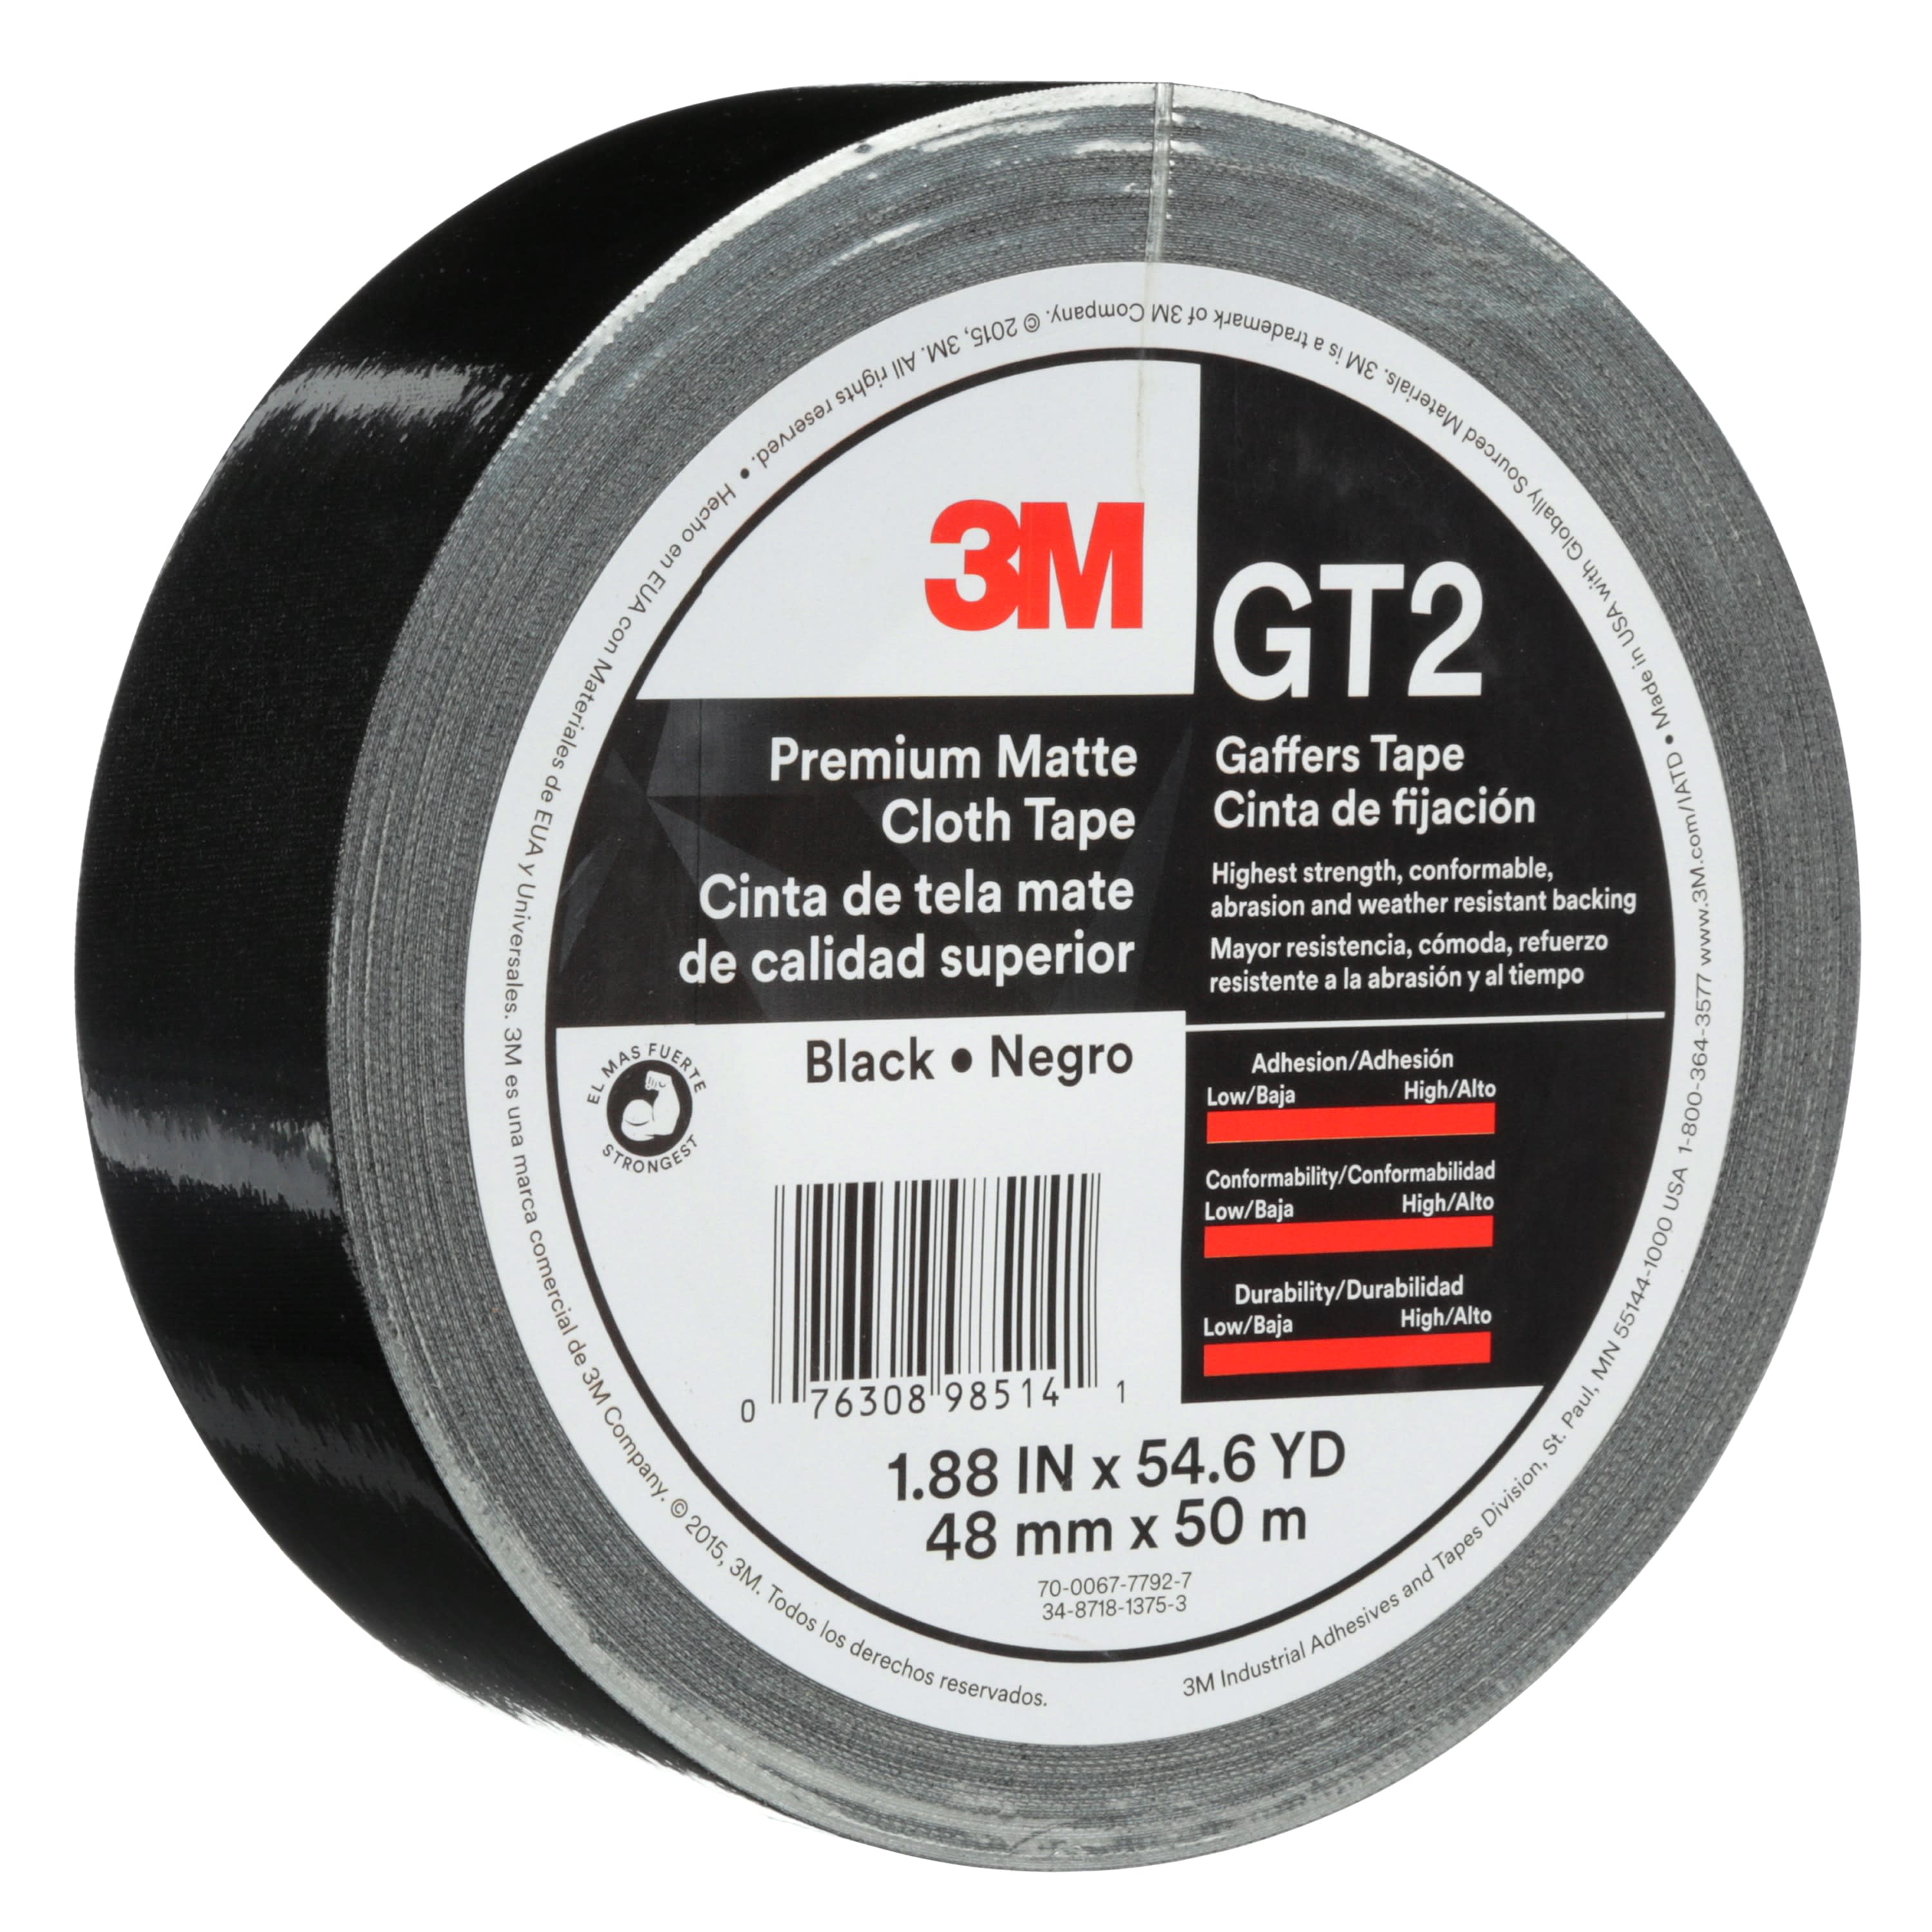 3M™ Premium Matte Cloth (Gaffers) Tape GT2, Black, 48 mm x 50 m, 11 mil,
24 per case